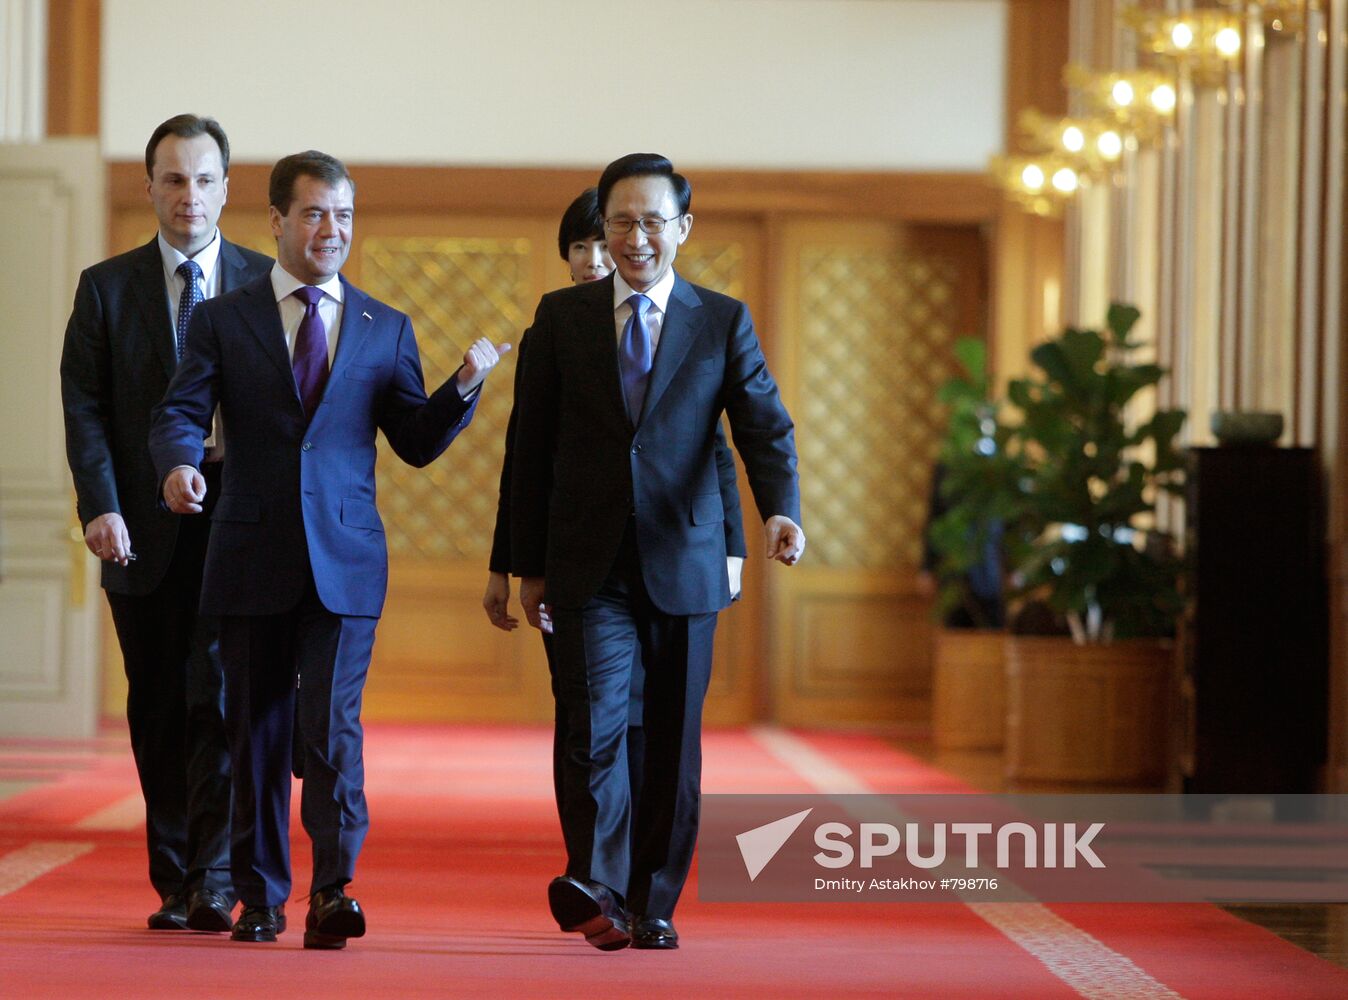 Dmitry Medvedev's official visit to Republic of Korea